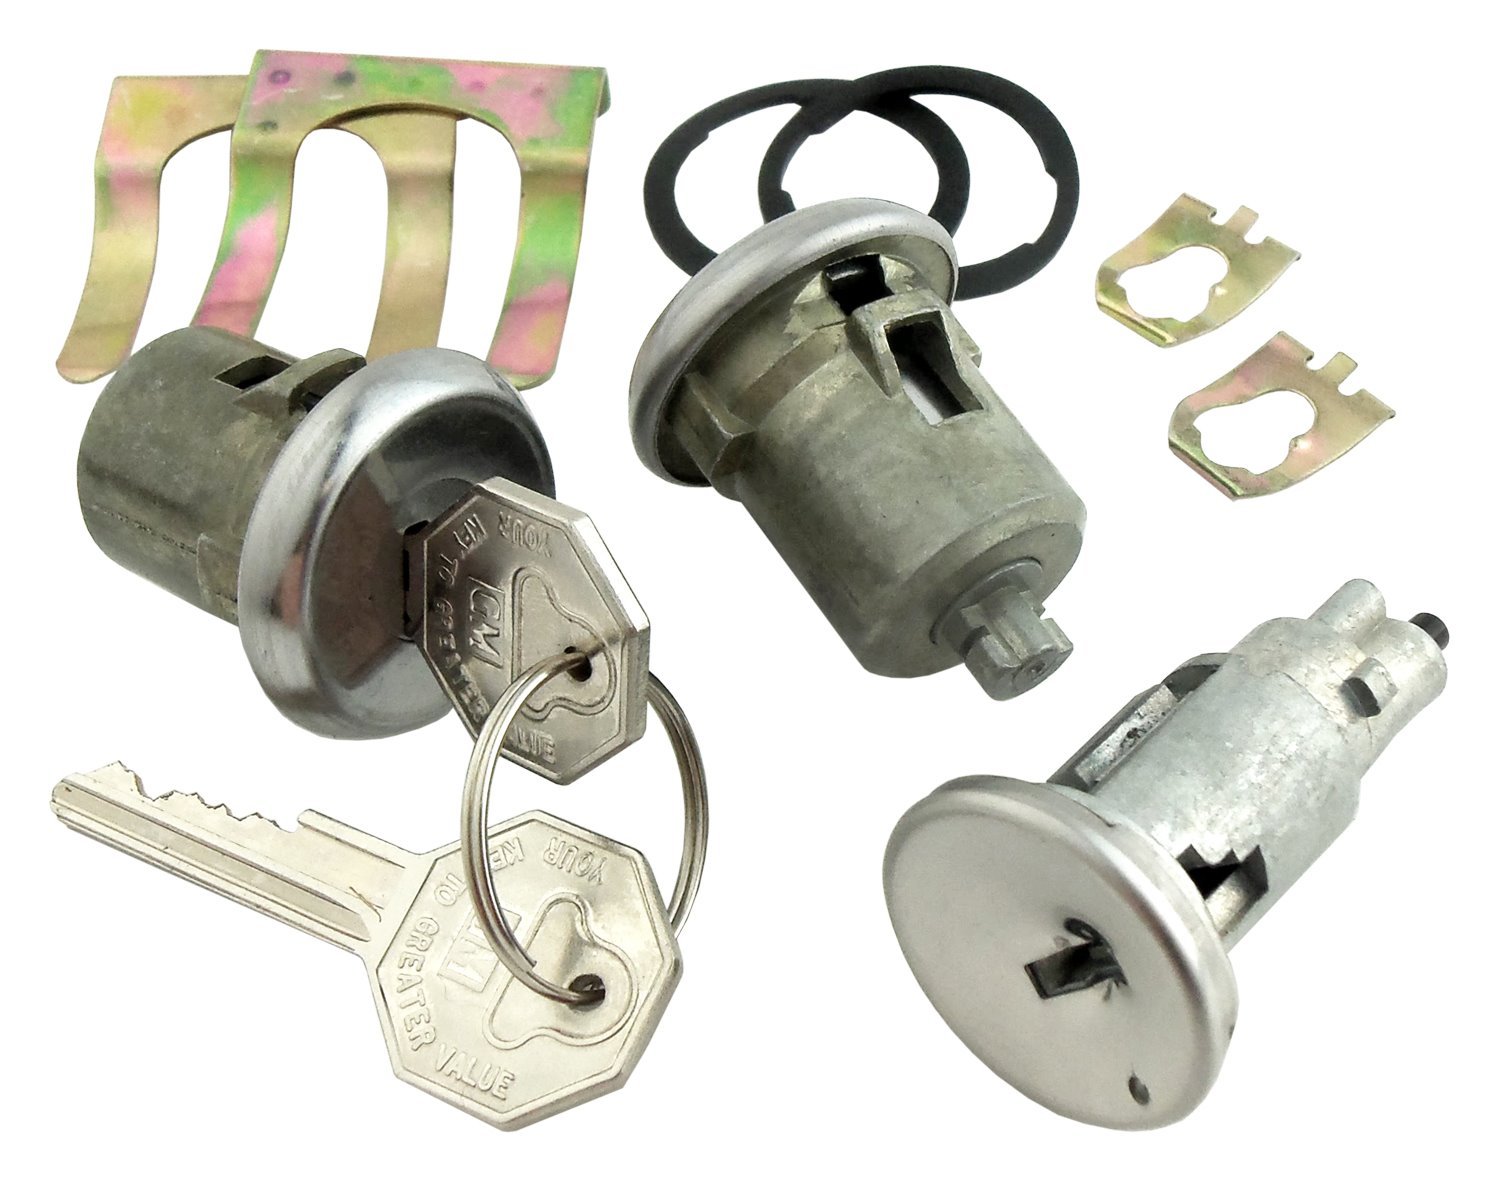 Ignition & Door Lock Set Fits Select 1968 GM Models [Original Octagon Keys]